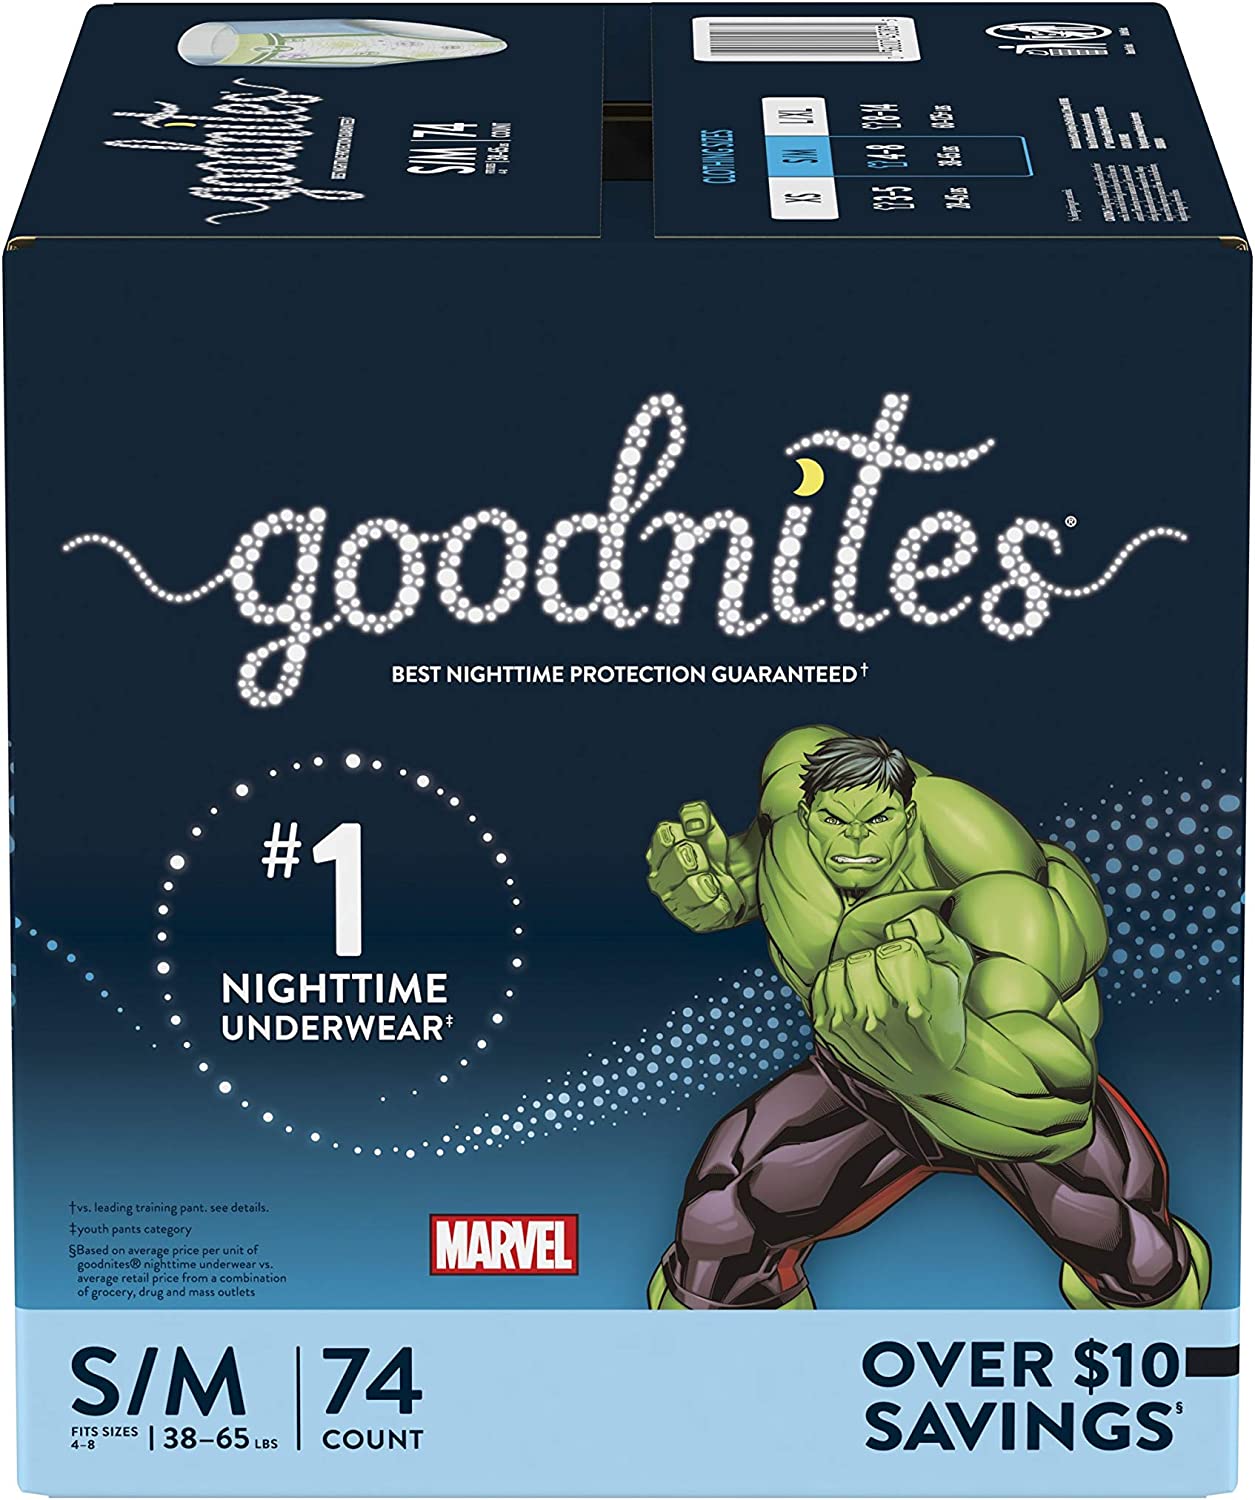 Goodnites WholeSale - Price List, Bulk Buy at